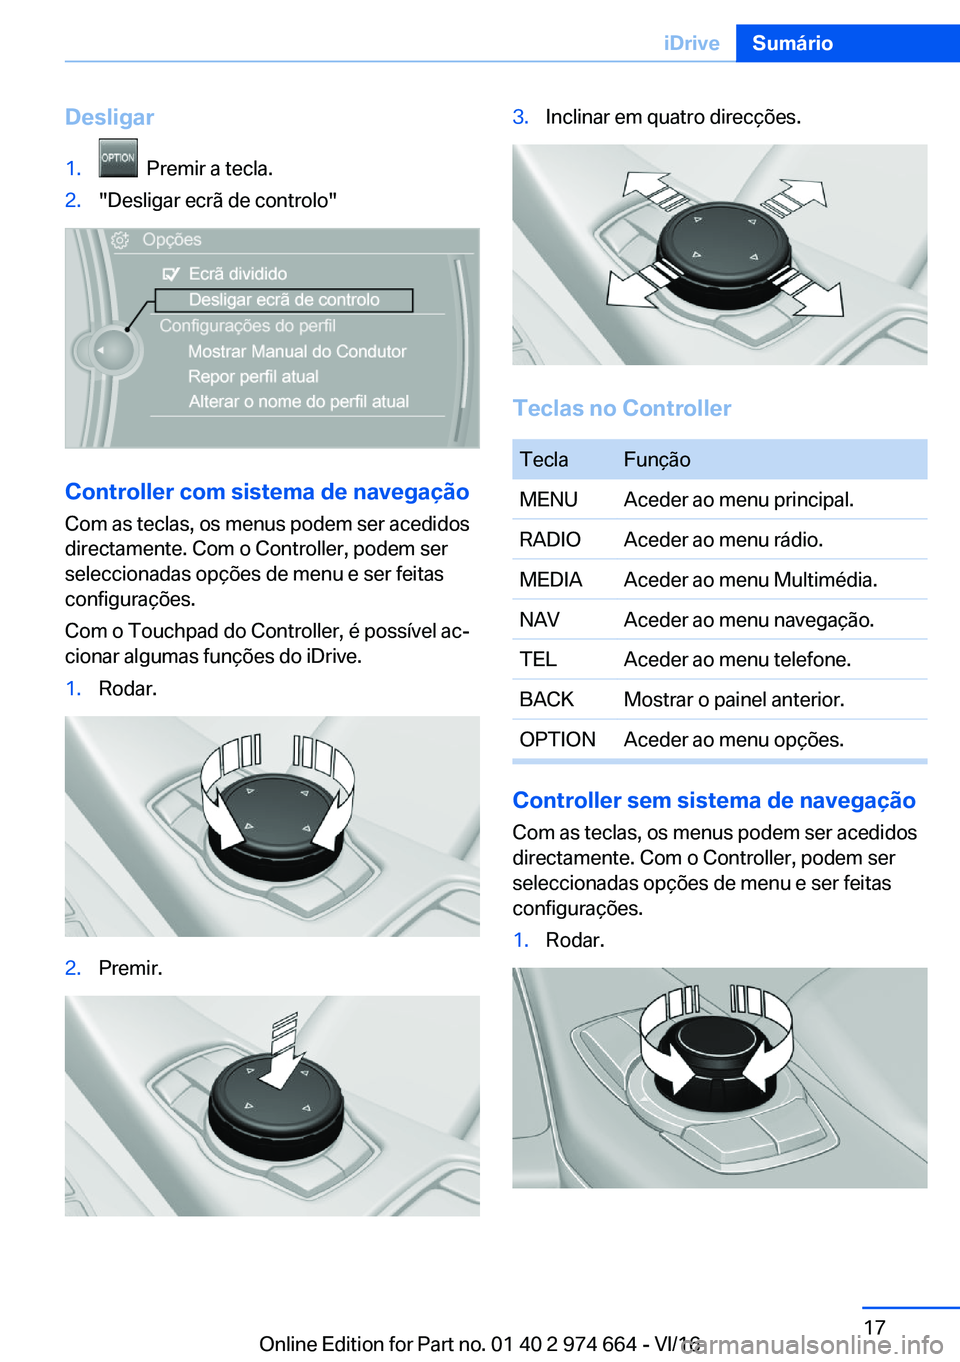 BMW M2 2017  Manual do condutor (in Portuguese) �D�e�s�l�i�g�a�r�1�.� � �P�r�e�m�i�r� �a� �t�e�c�l�a�.�2�.�"�D�e�s�l�i�g�a�r� �e�c�r�ã� �d�e� �c�o�n�t�r�o�l�o�"
�C�o�n�t�r�o�l�l�e�r��c�o�m��s�i�s�t�e�m�a��d�e��n�a�v�e�g�a�